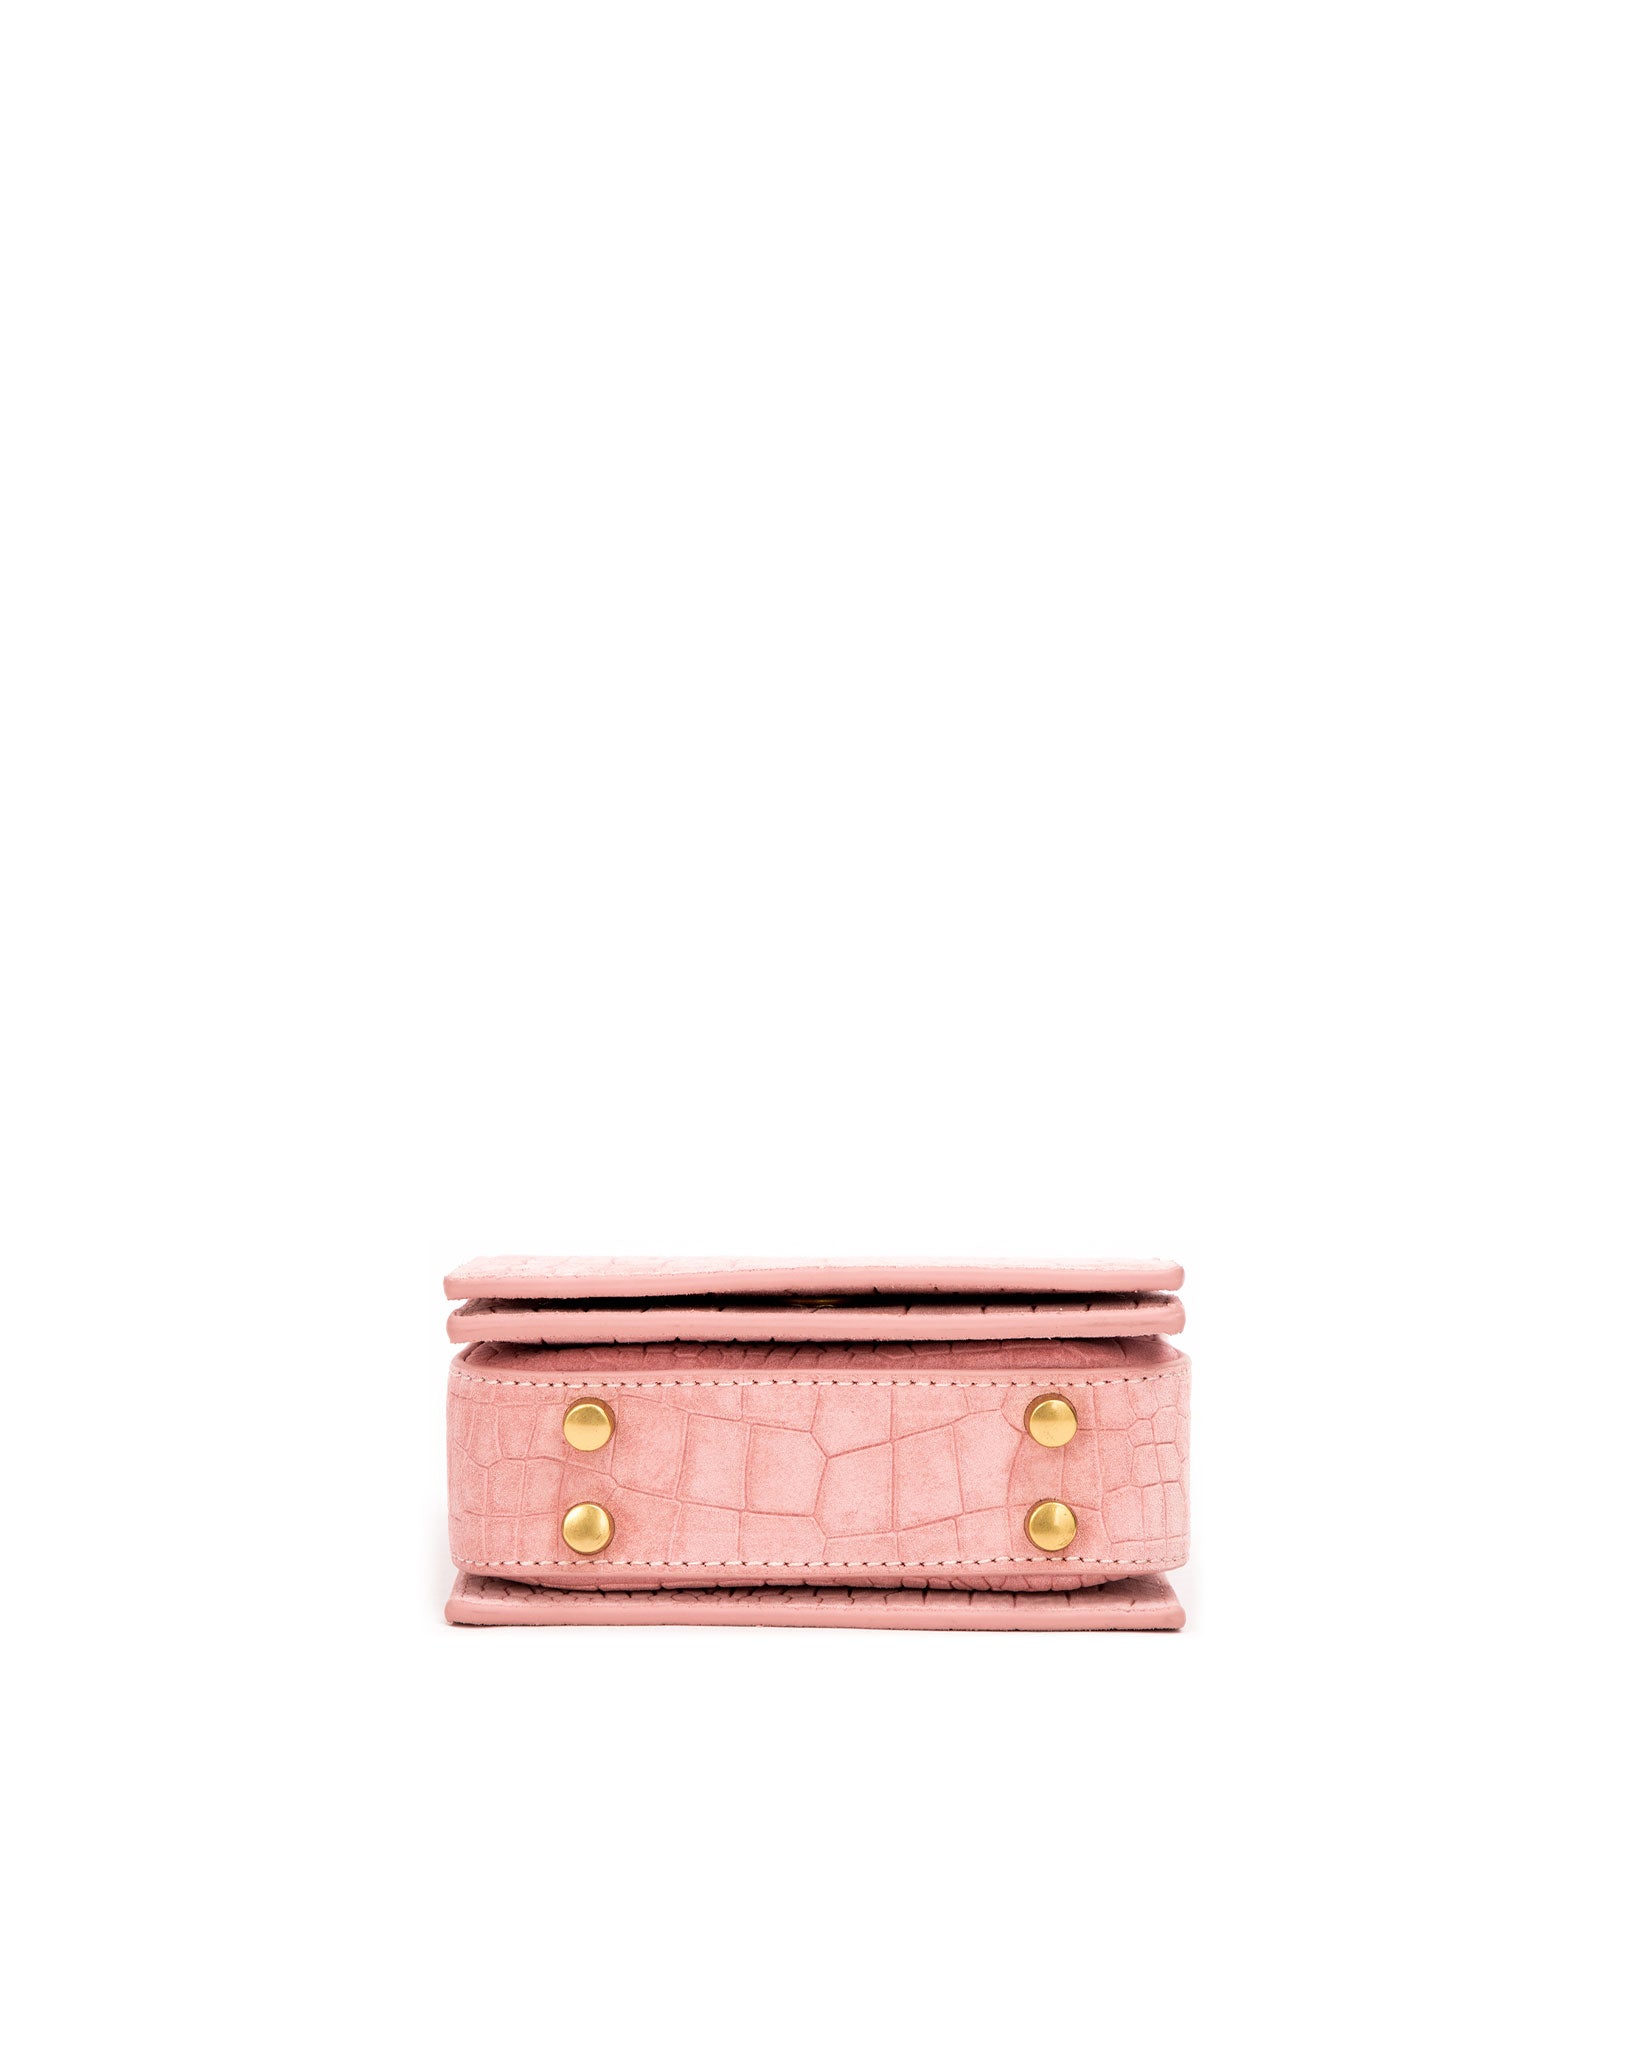 Brandon Blackwood New York - Mini Sophia Bag - Pink Croc Embossed Suede w/ Gold Hardware